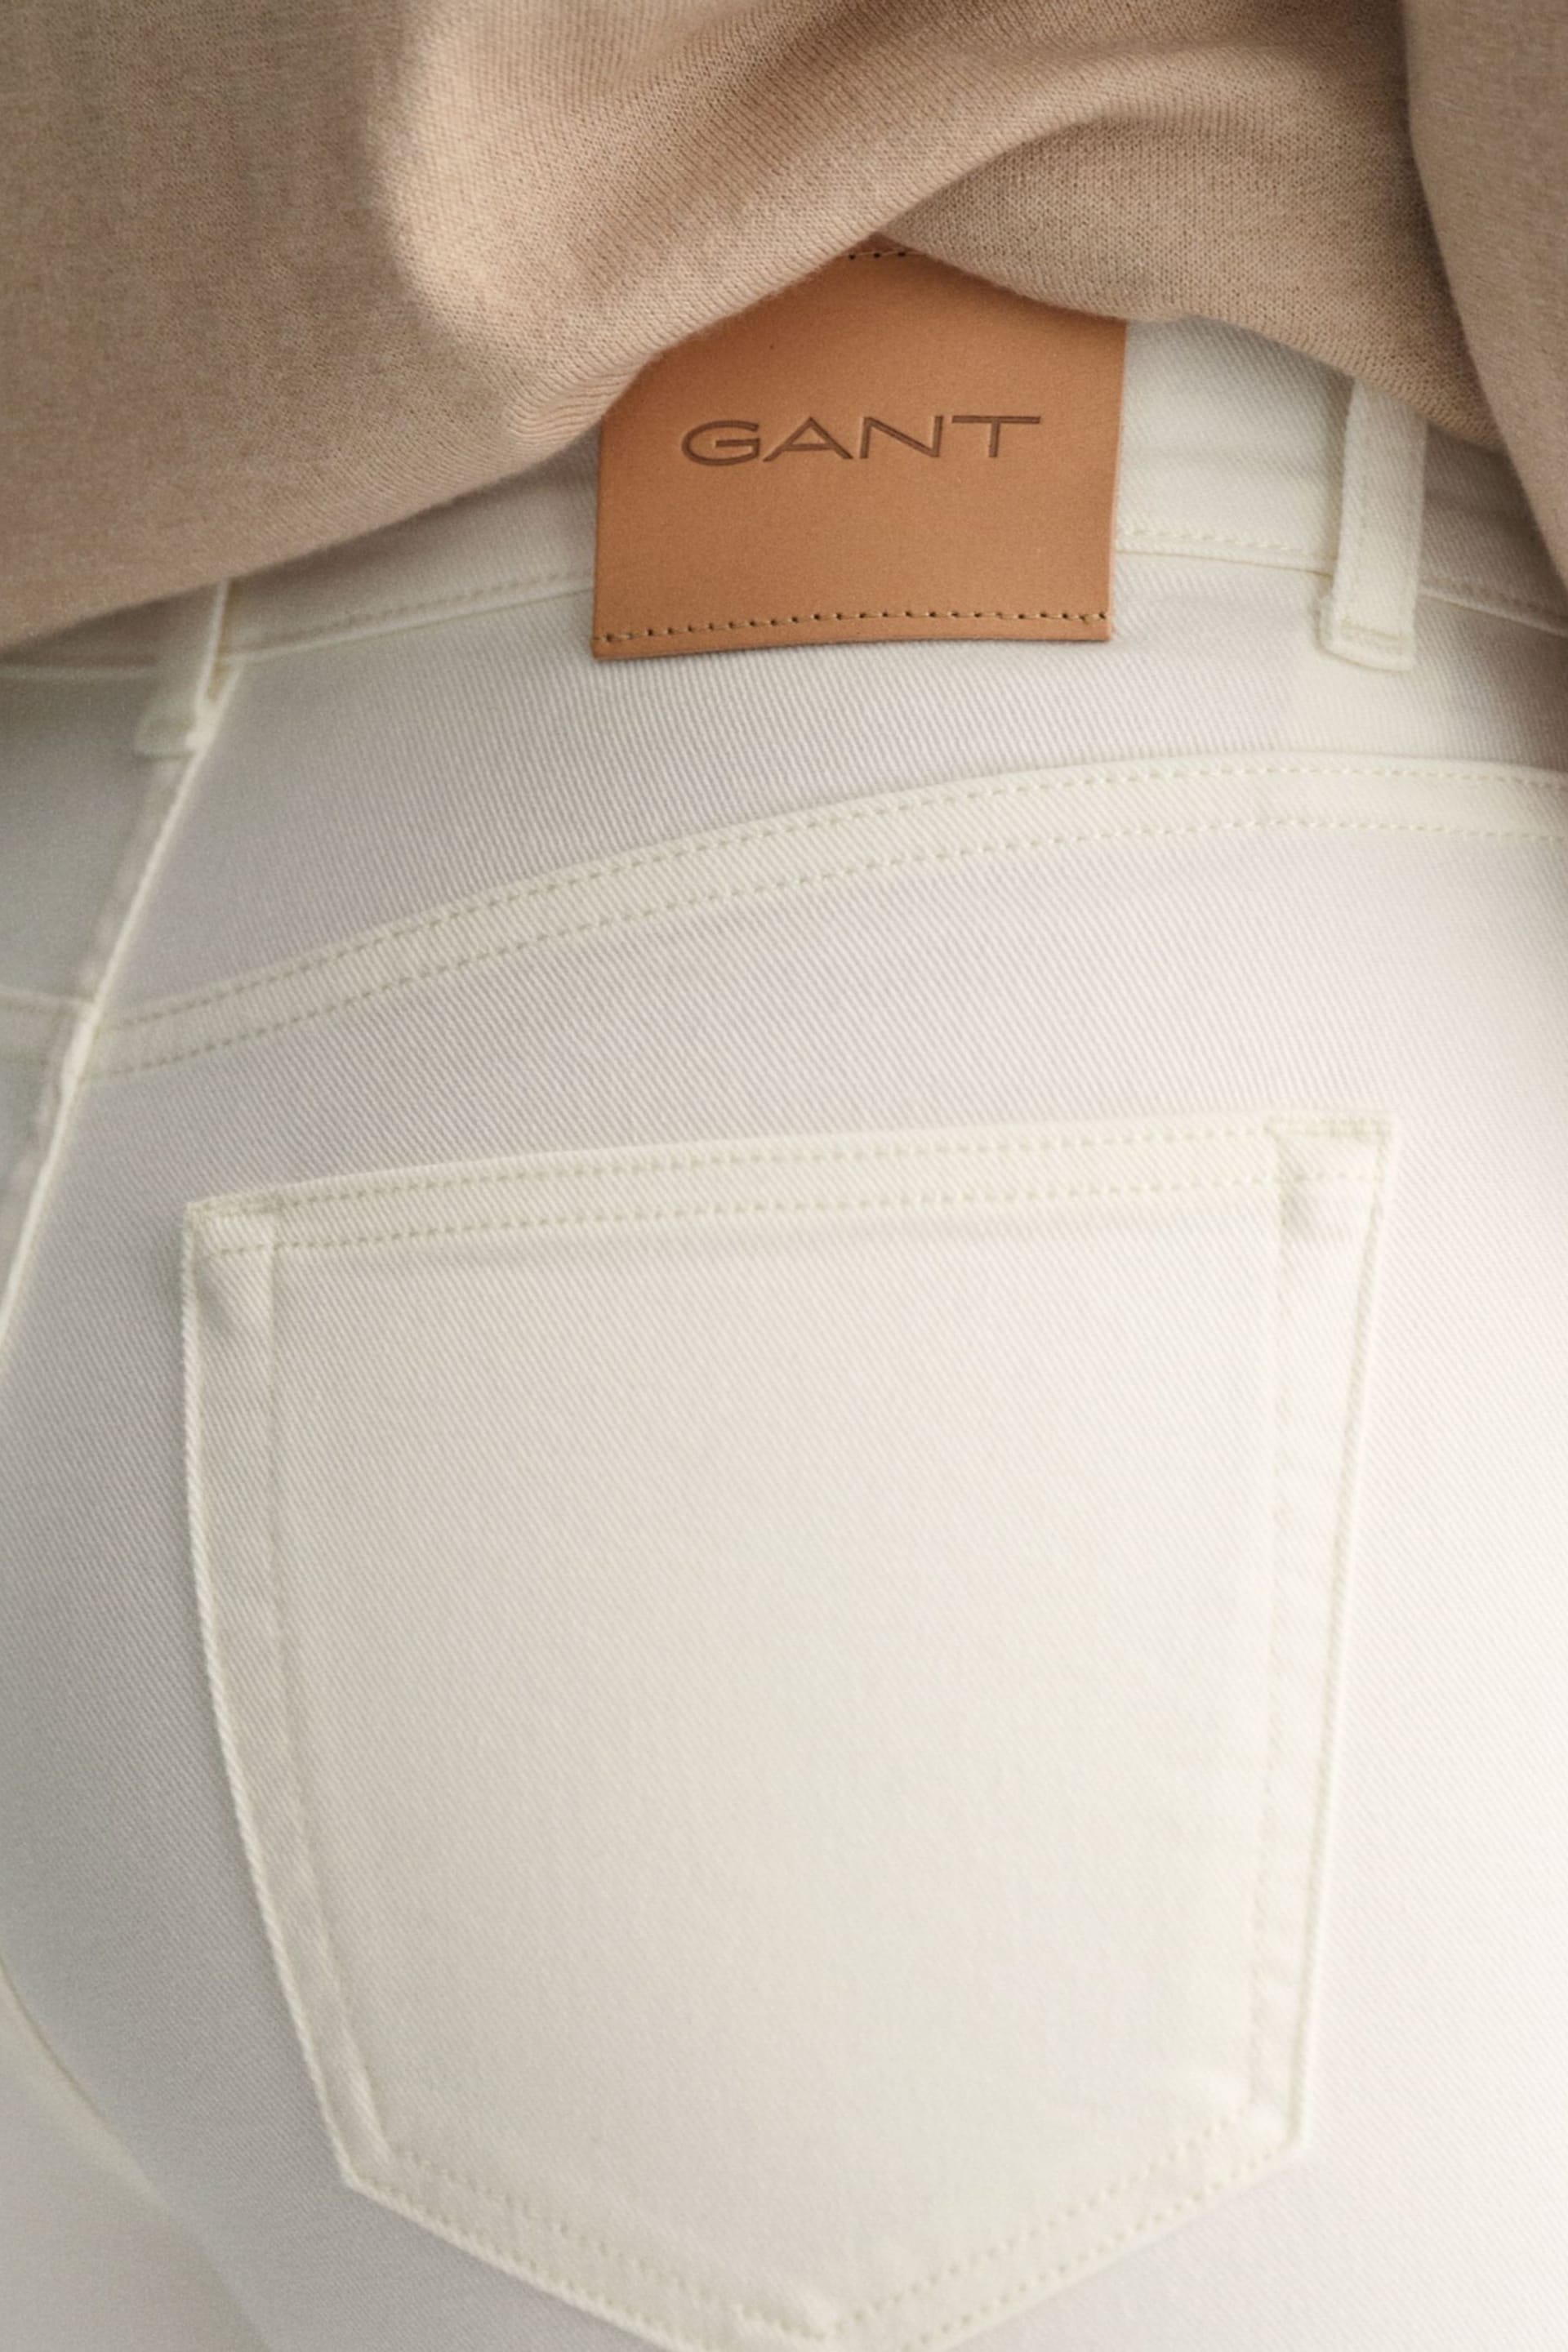 GANT White Slim Fit Ankle Grazer Jeans - Image 8 of 9